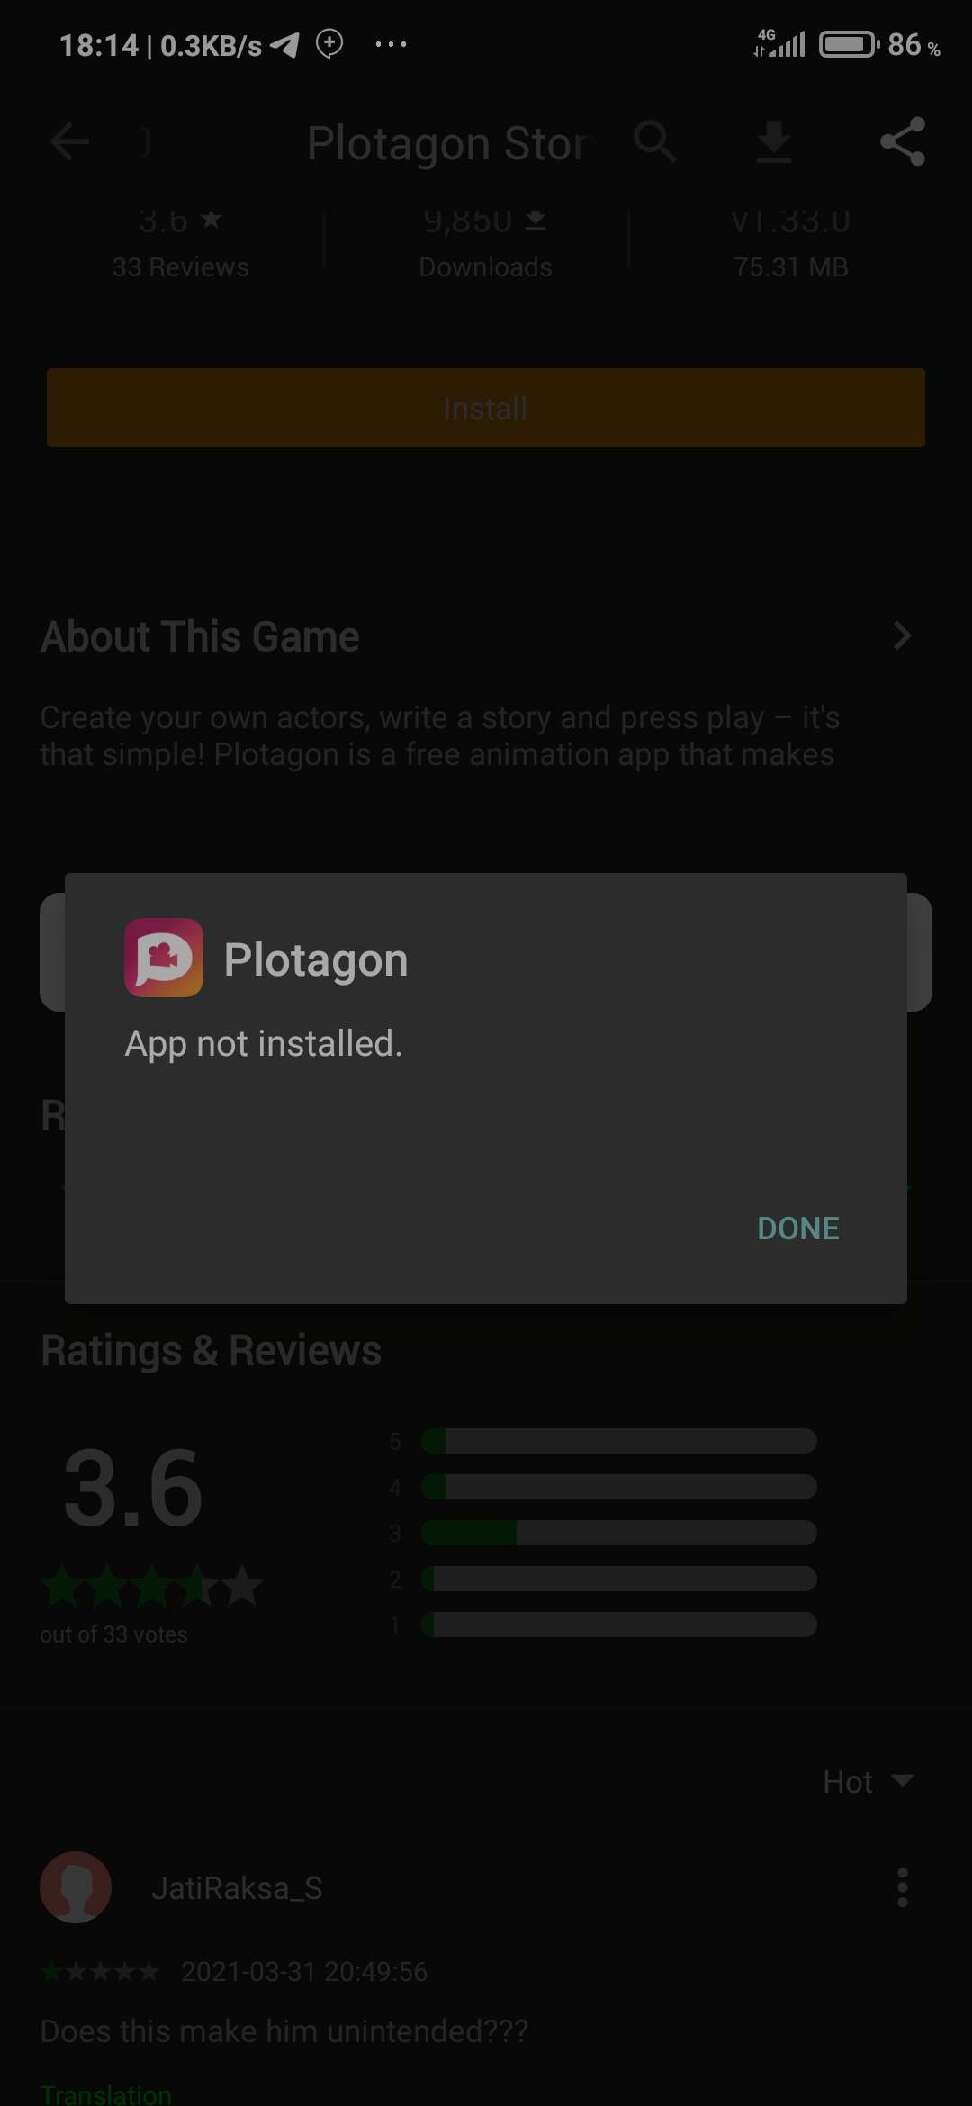 plotagon story obb file full unlock all apk download